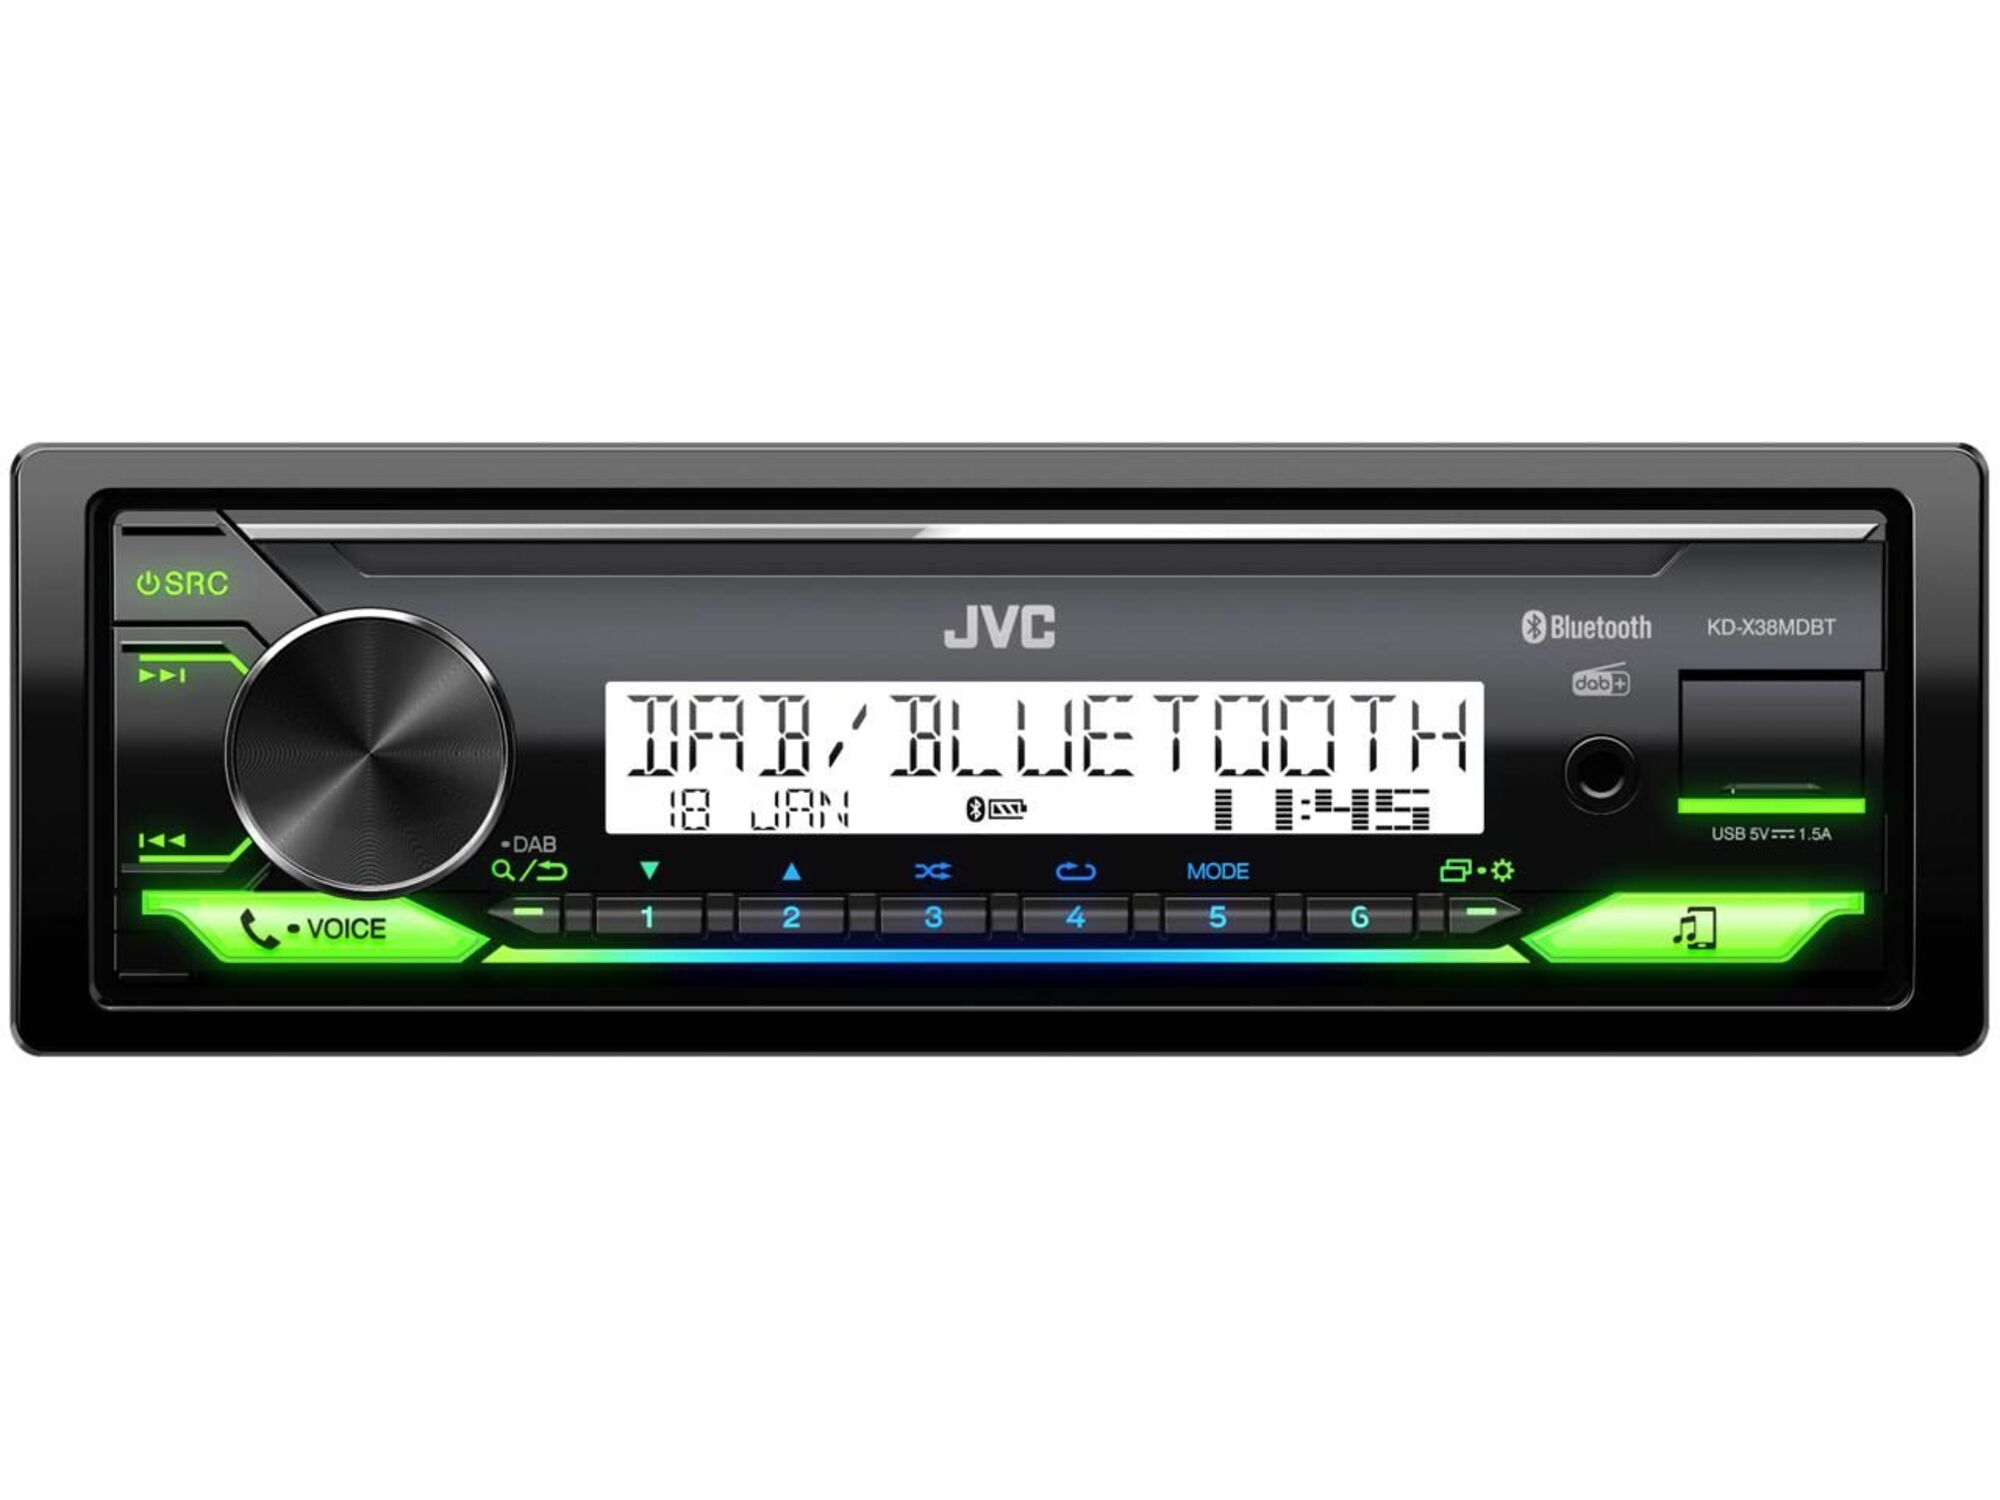 JVC Auto radio KD-X38MDBT